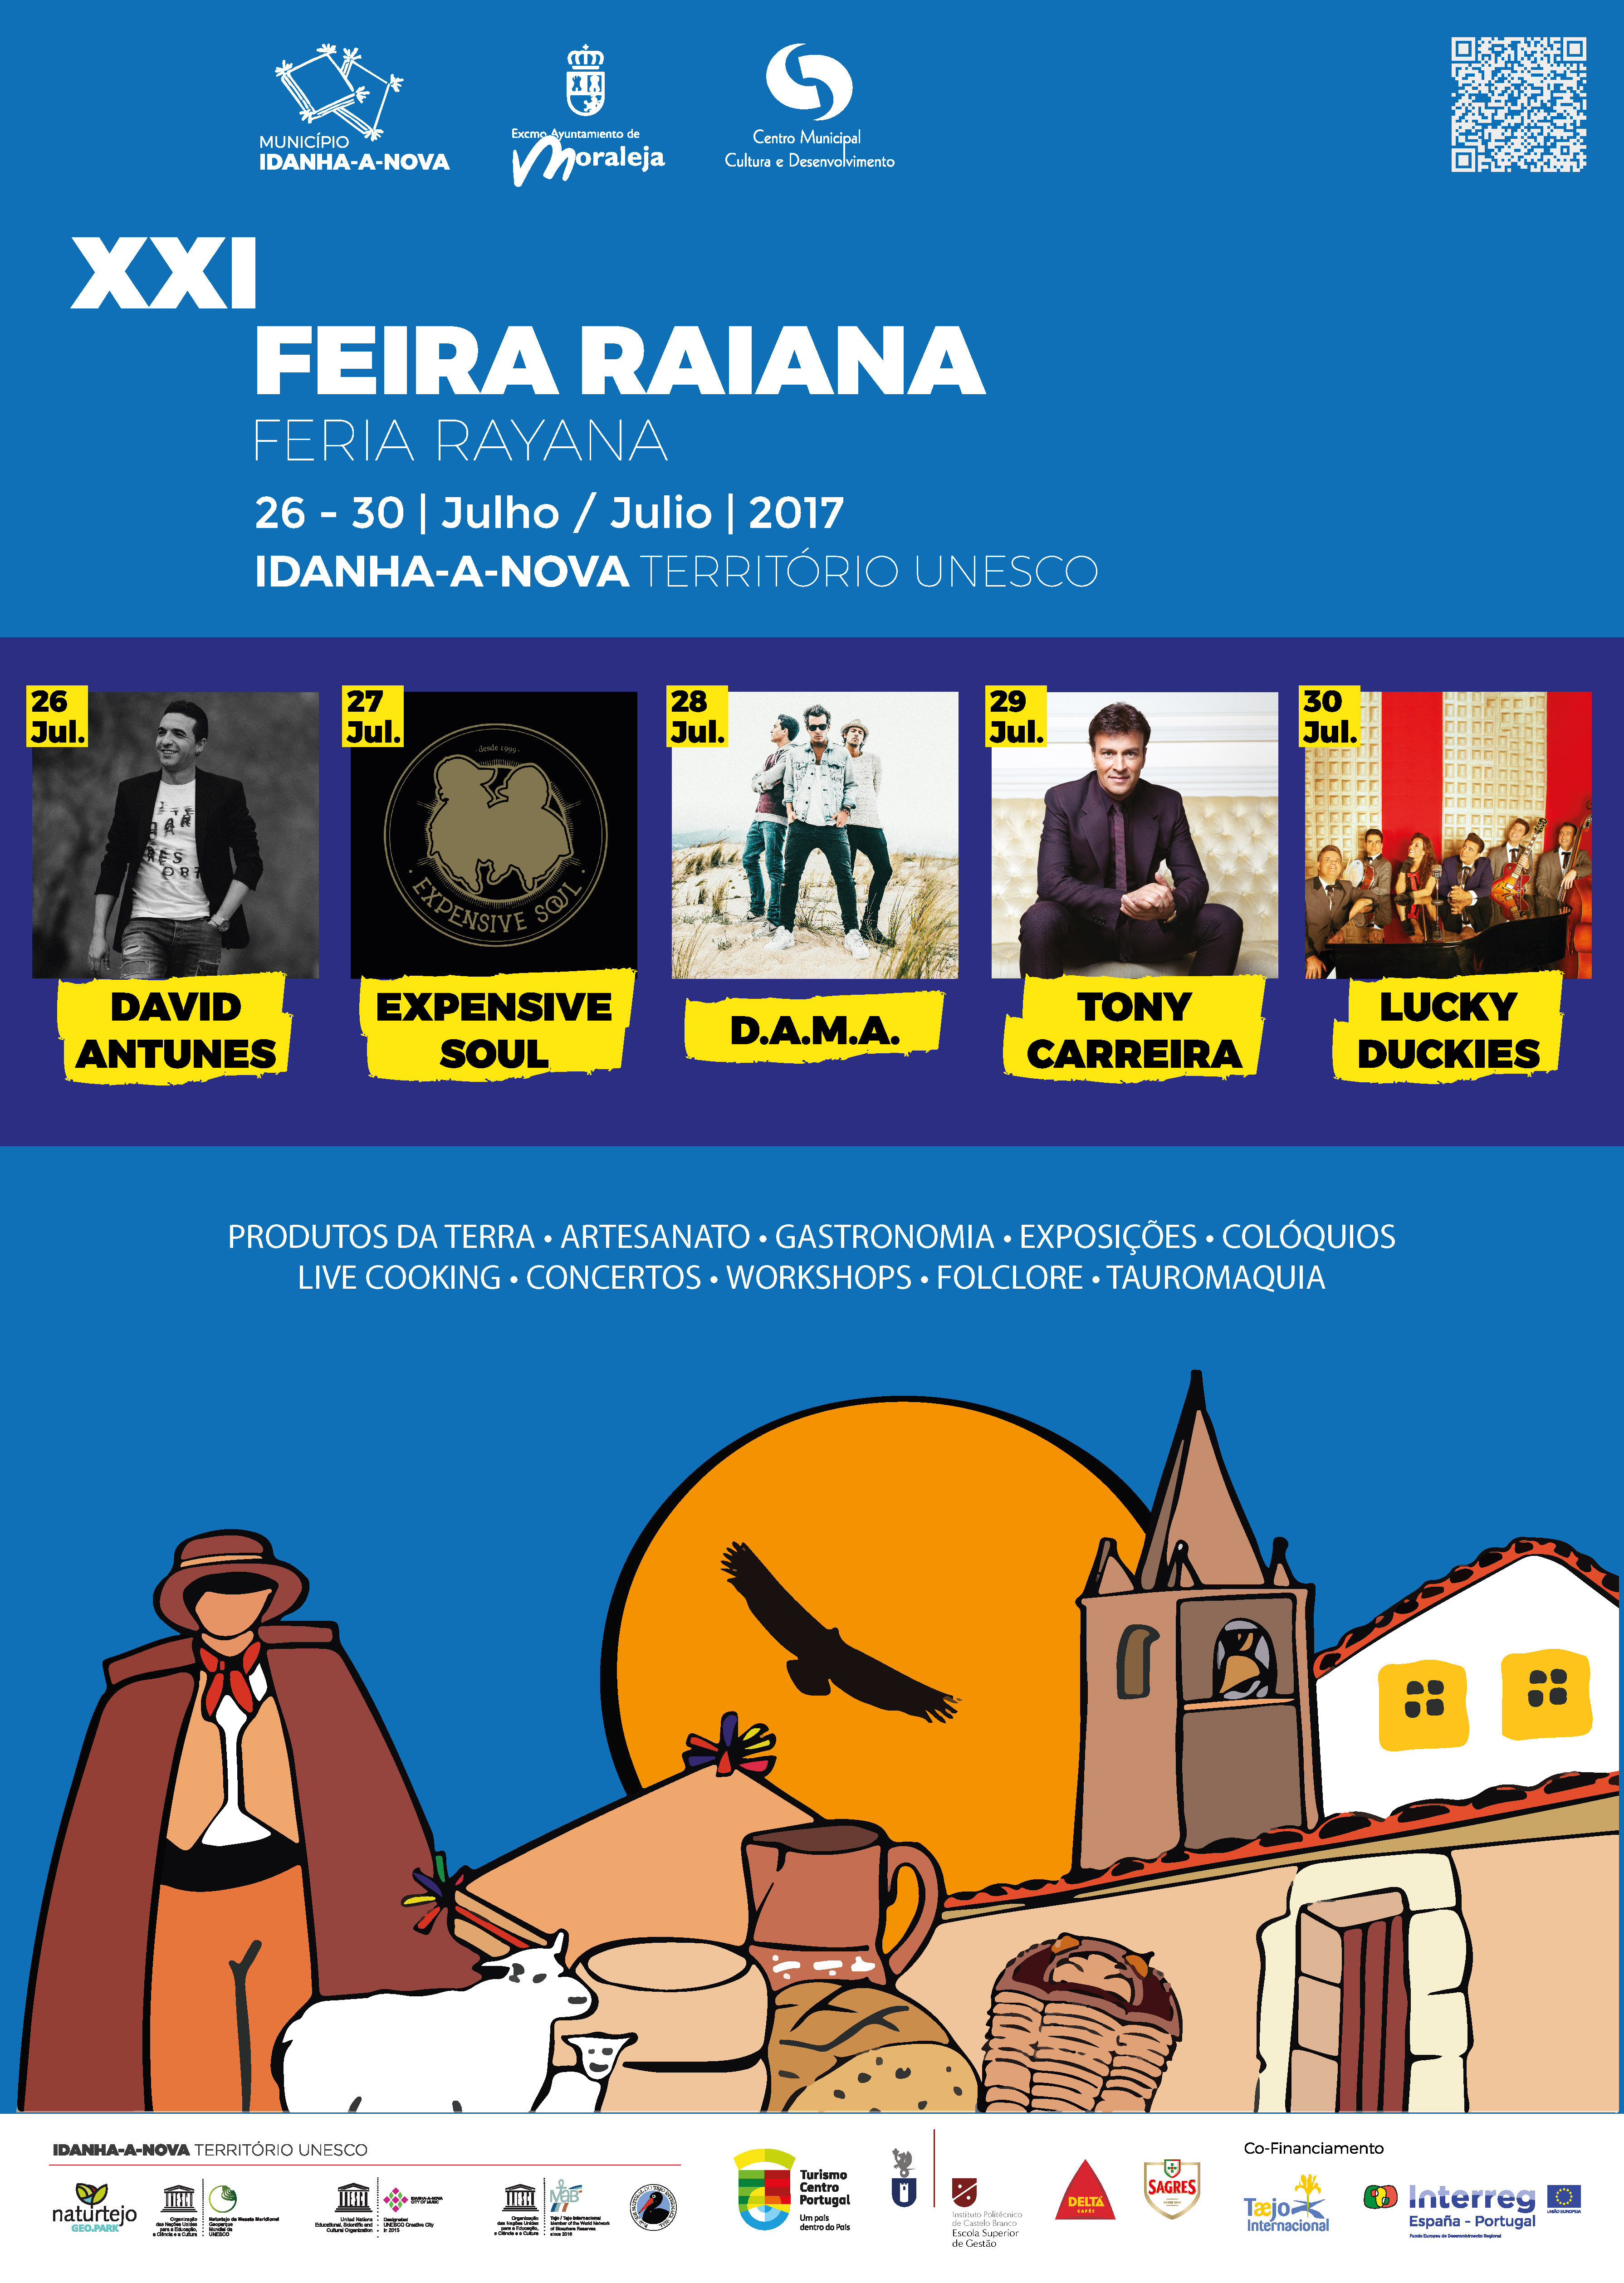 Idanha-a-Nova: Expensive Soul, D.A.M.A. e Tony Carreira na Feira Raiana